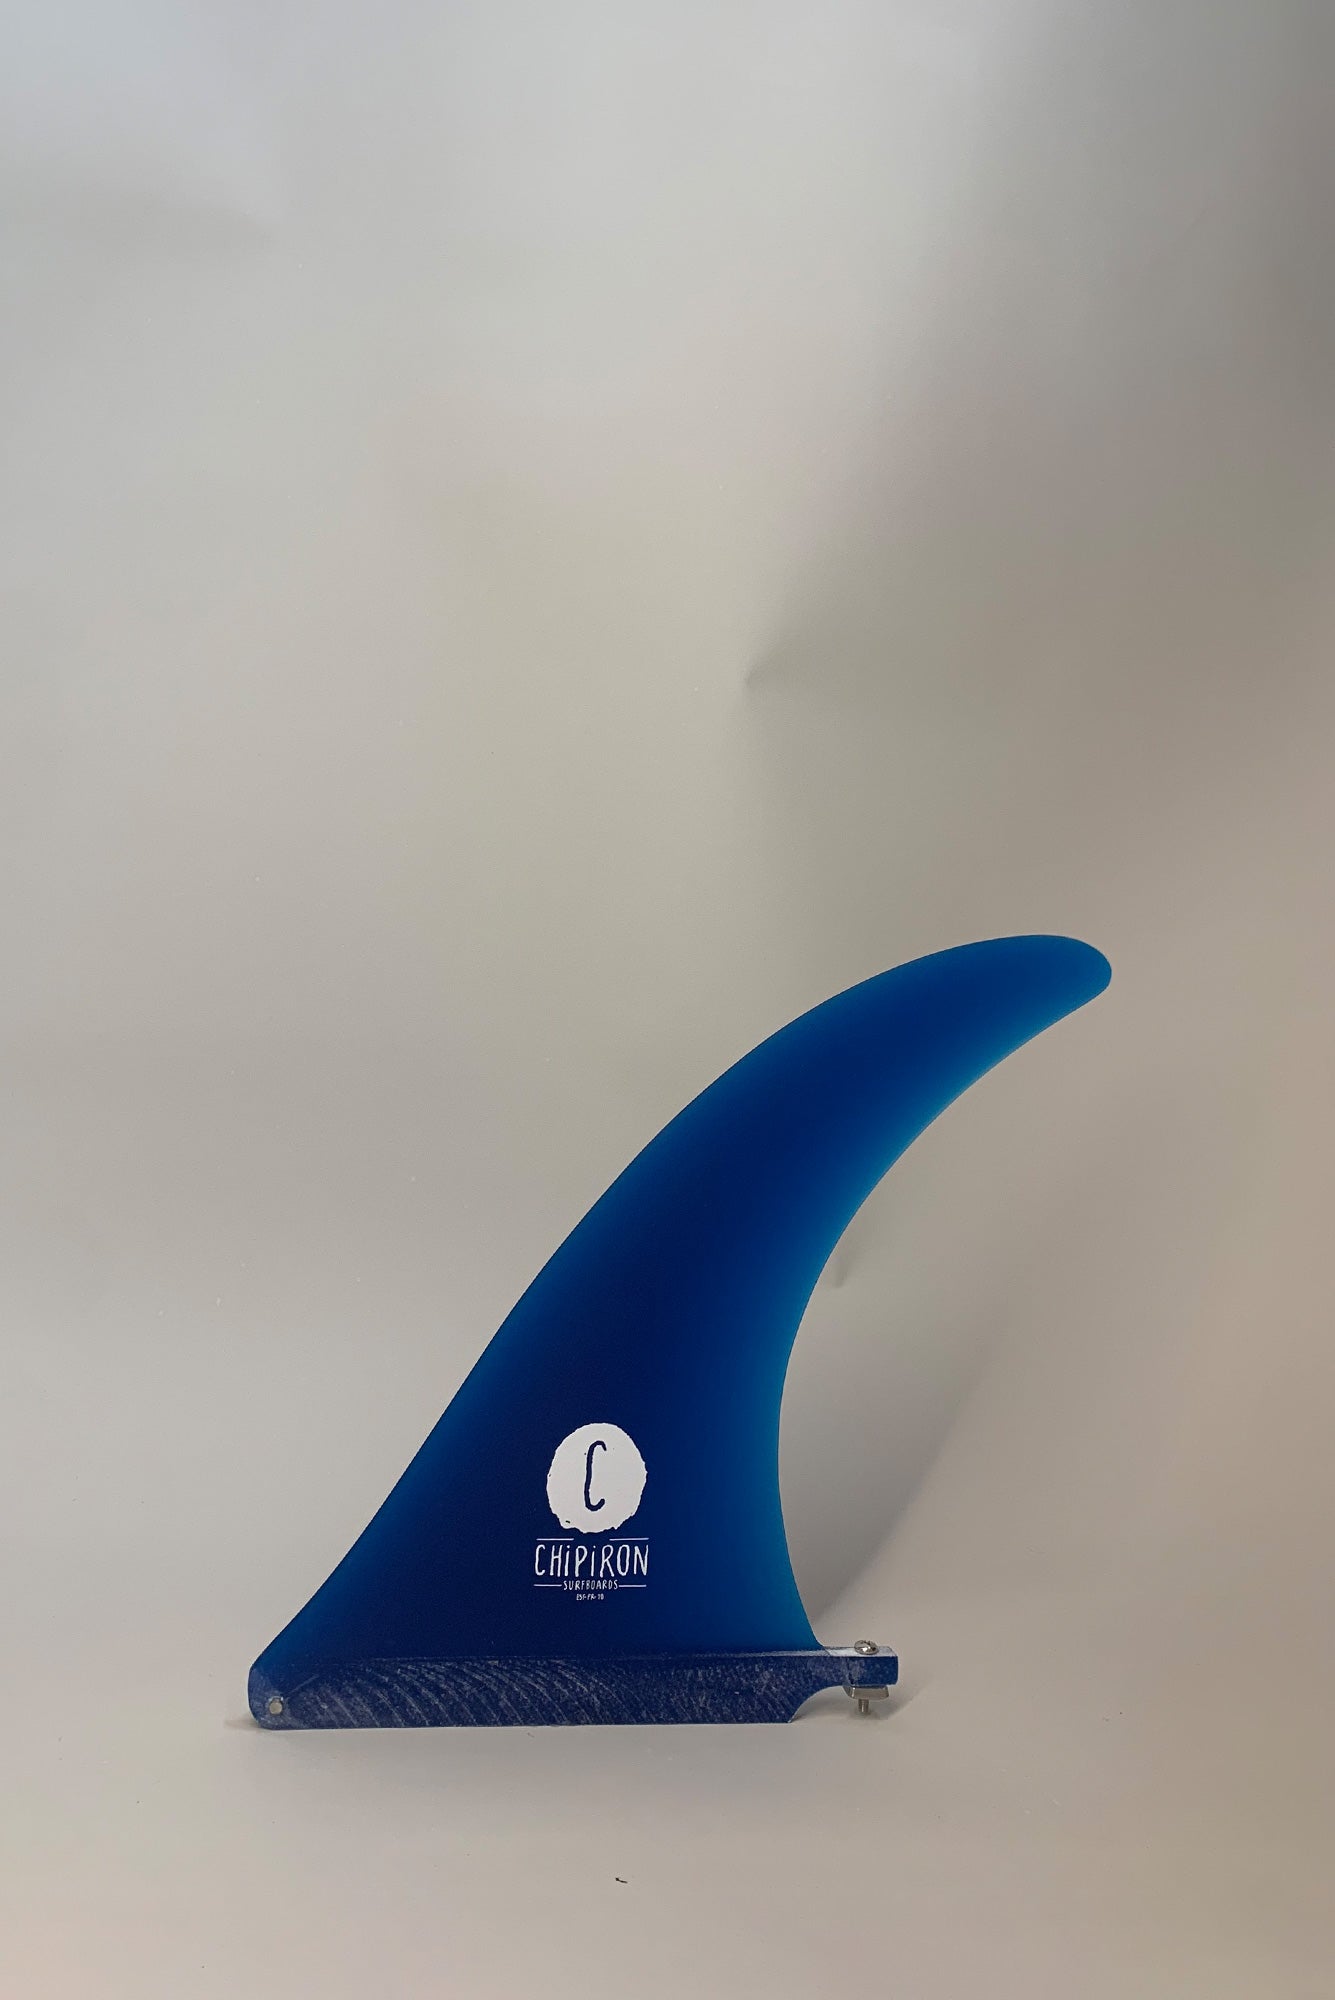 dérive-single-bleu-surf-dolphin-9_75-chipiron-surfboards-hossegor